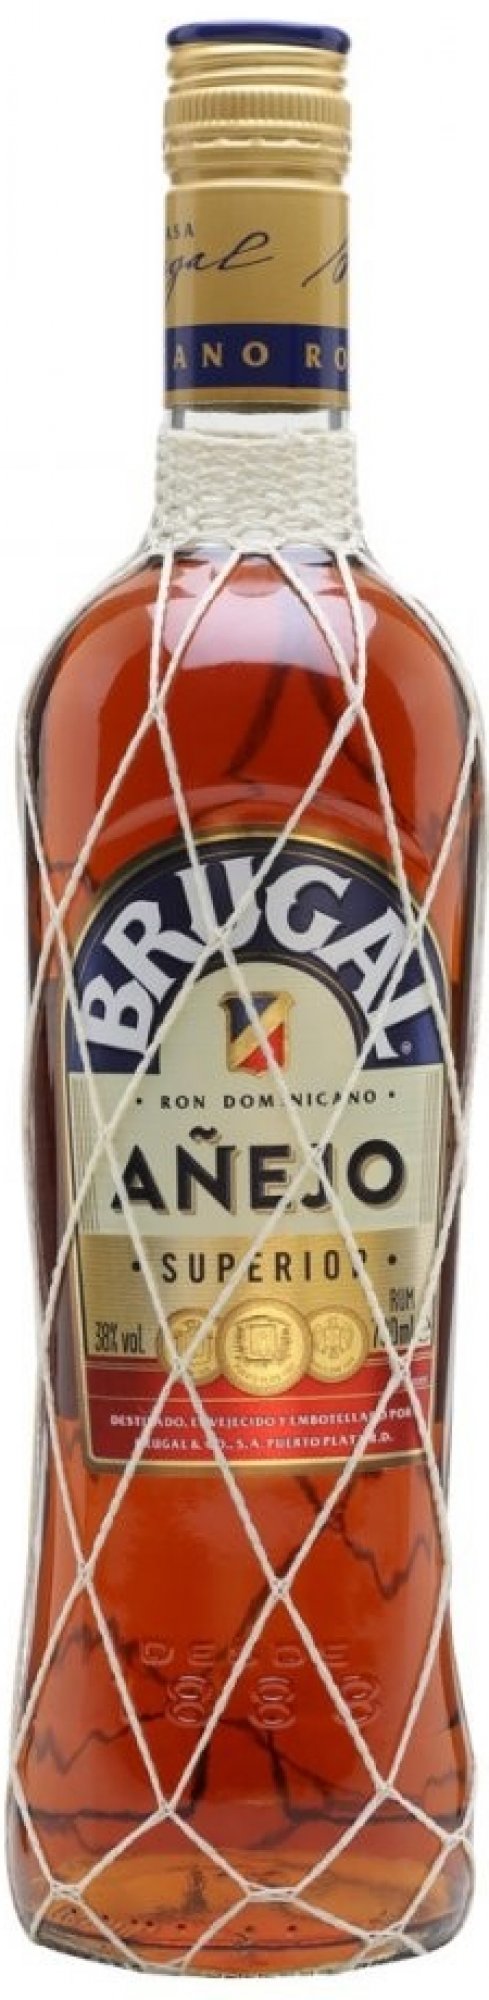 Brugal Aňejo Superior Dominican rum 38% 0,7l